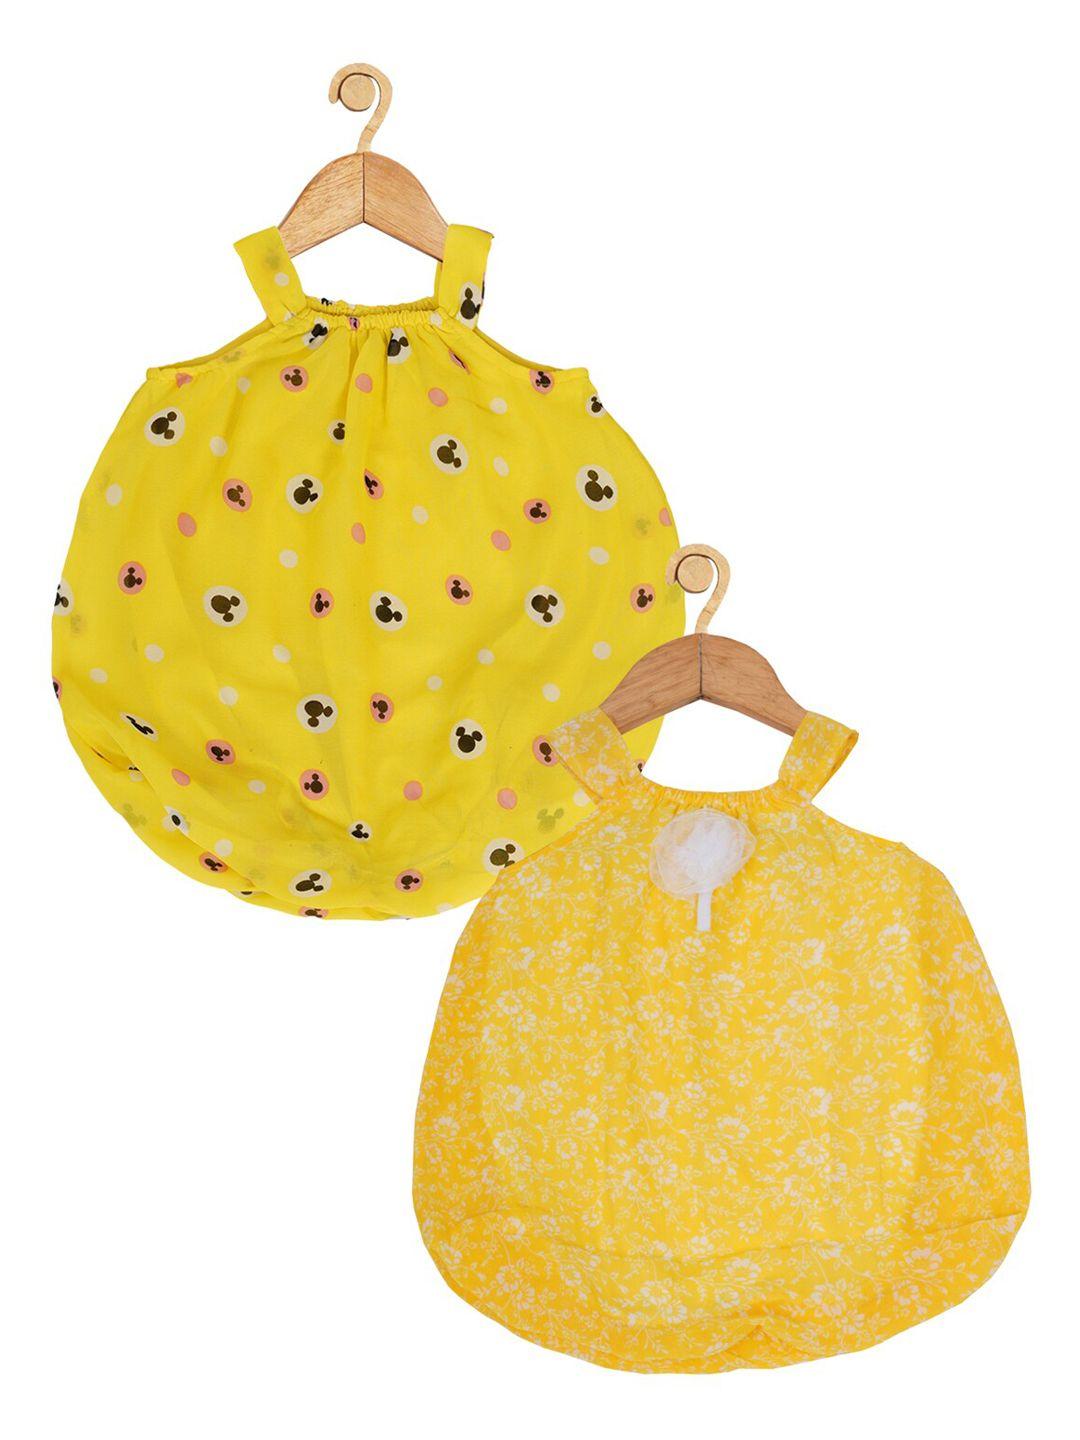 creative infant girls pack of 2 printed romper dresses